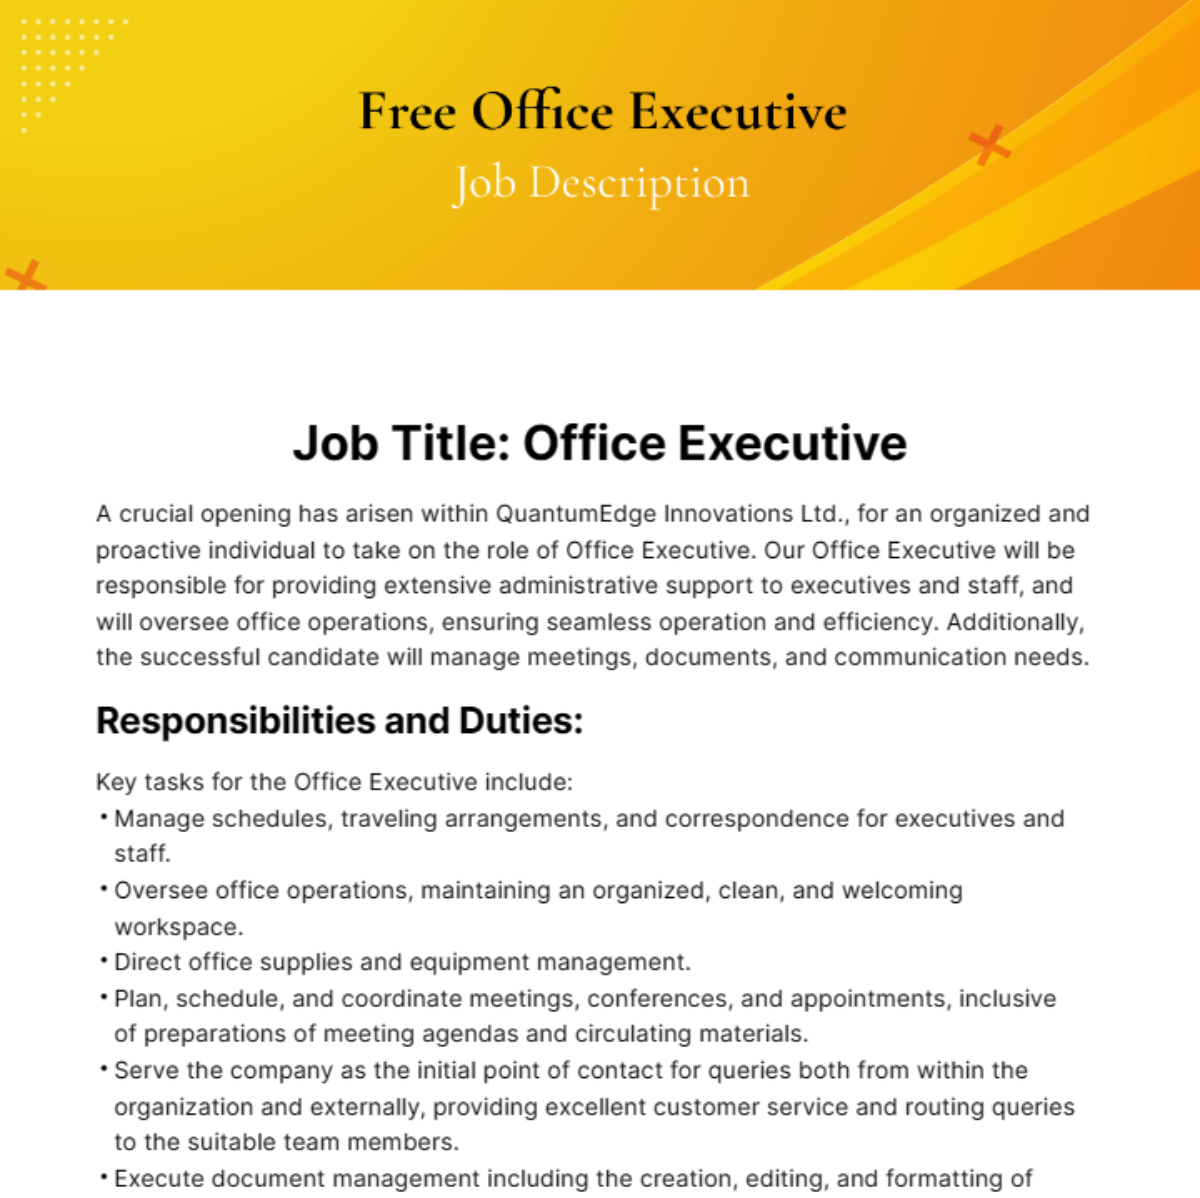 Free Office Executive Job Description Template